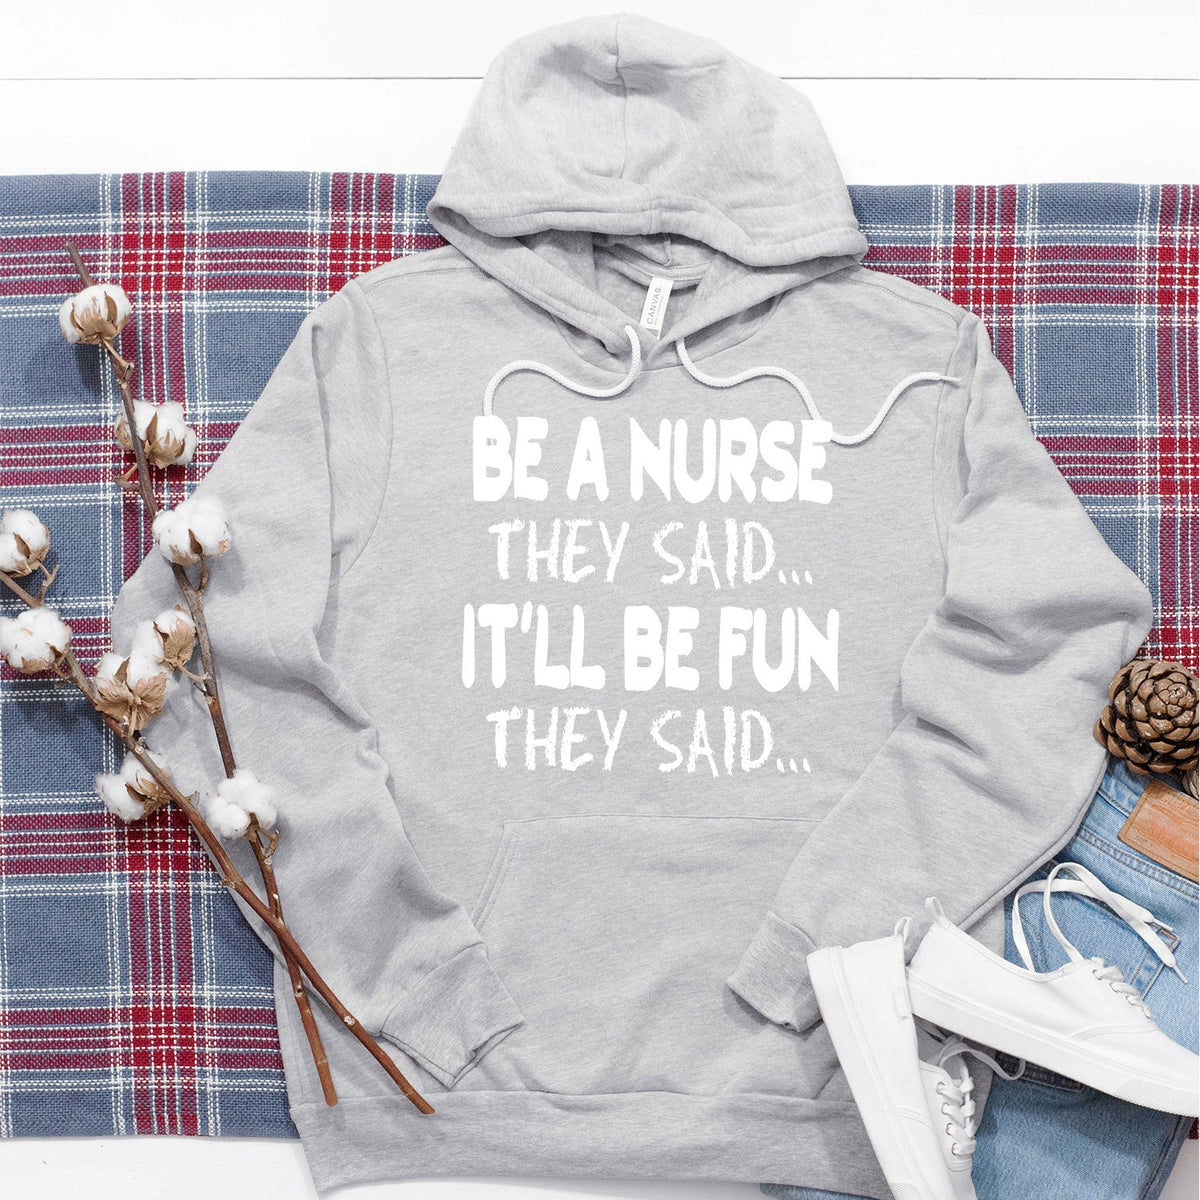 Be A Nurse They Said... It&#39;ll Be Fun They Said - Hoodie Sweatshirt